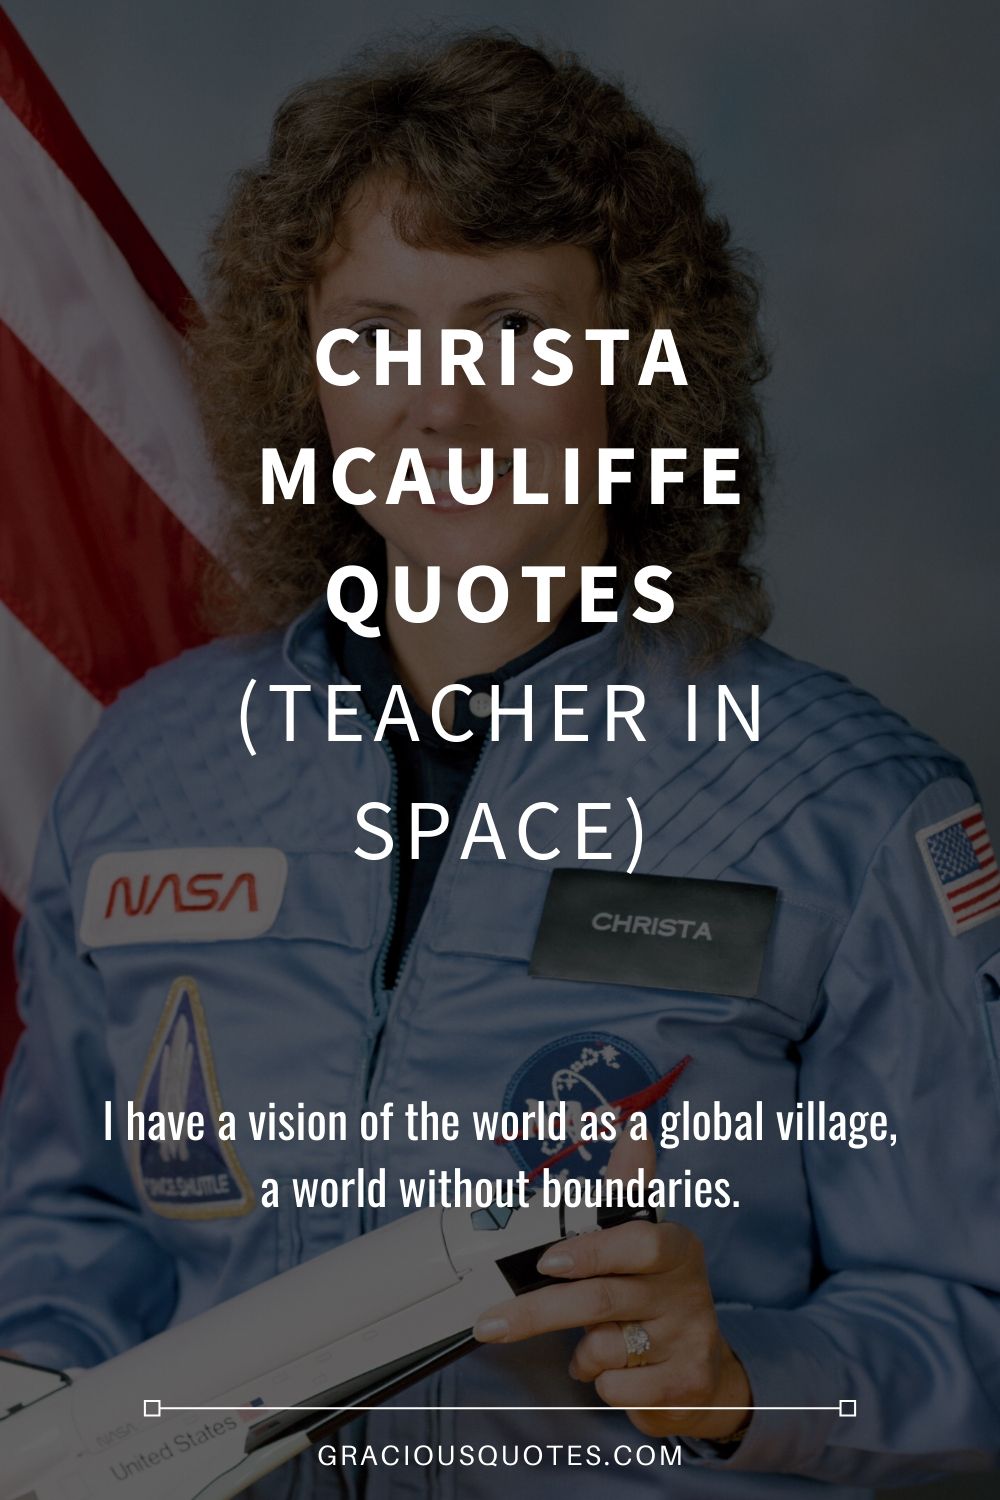 Christa McAuliffe Quotes (TEACHER IN SPACE) - Gracious Quotes